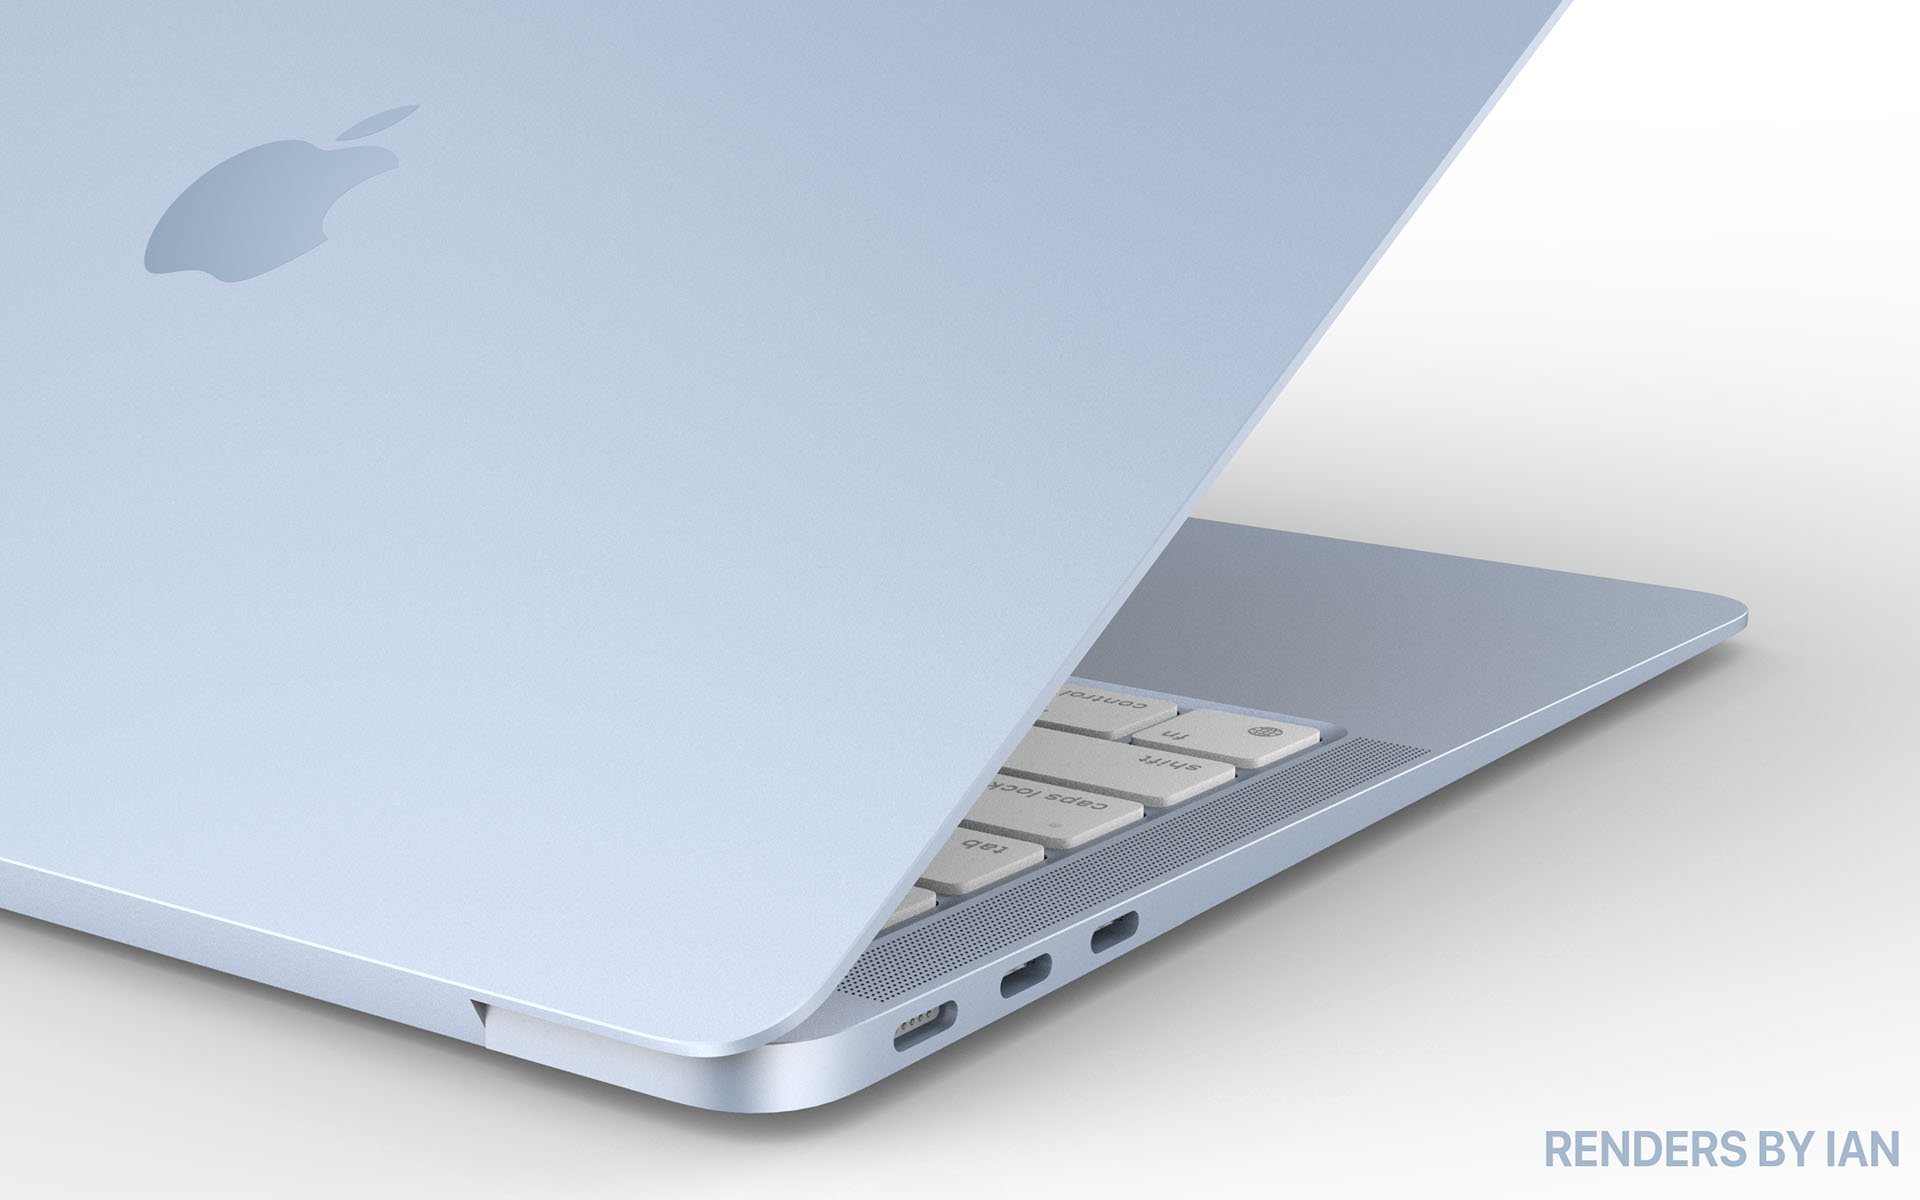 A MacBook Air with an M2 chip for 2022? Archyworldys